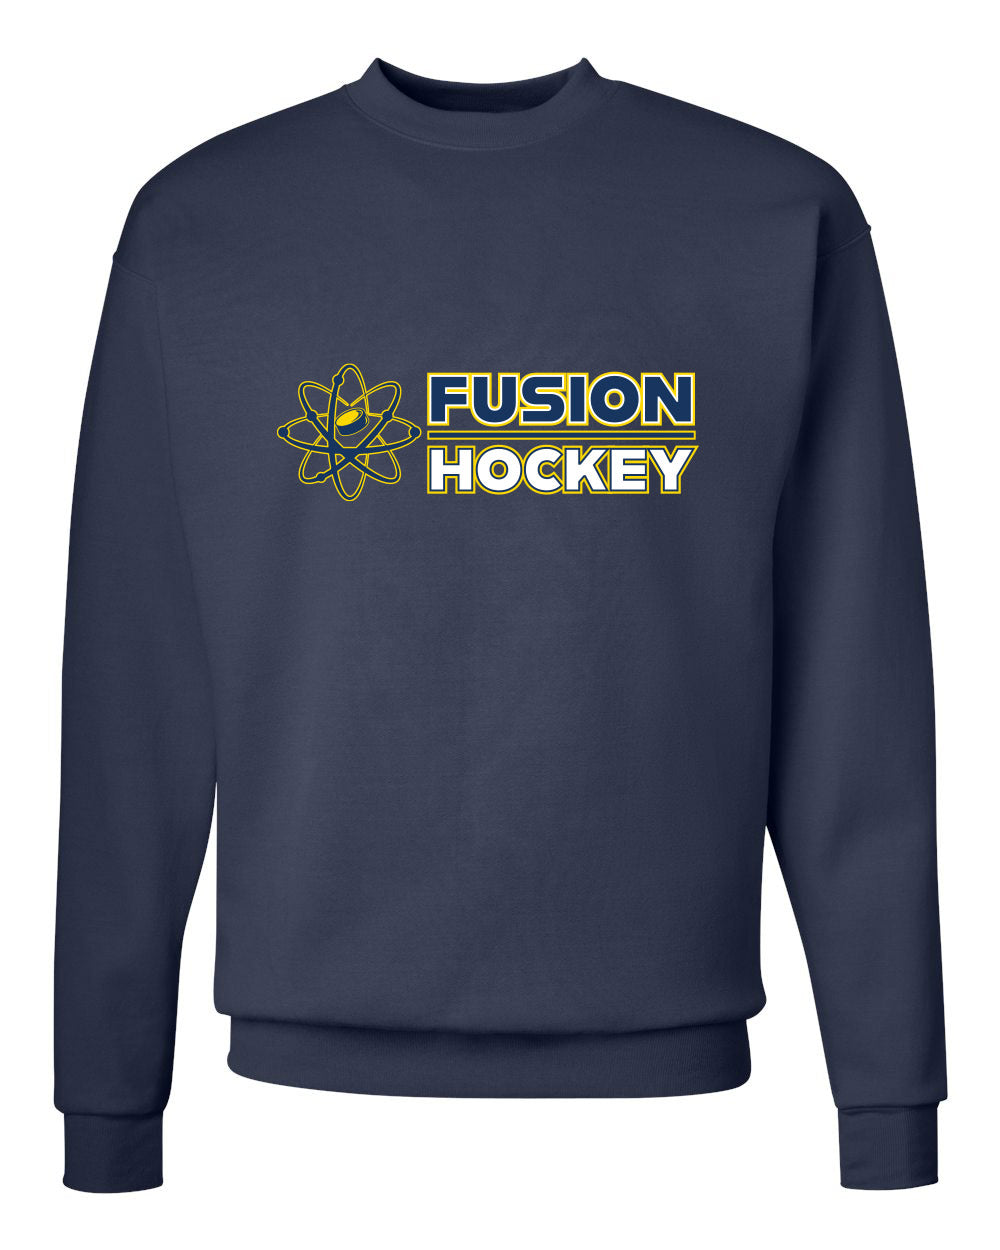 Fusion Adult Sweatshirt